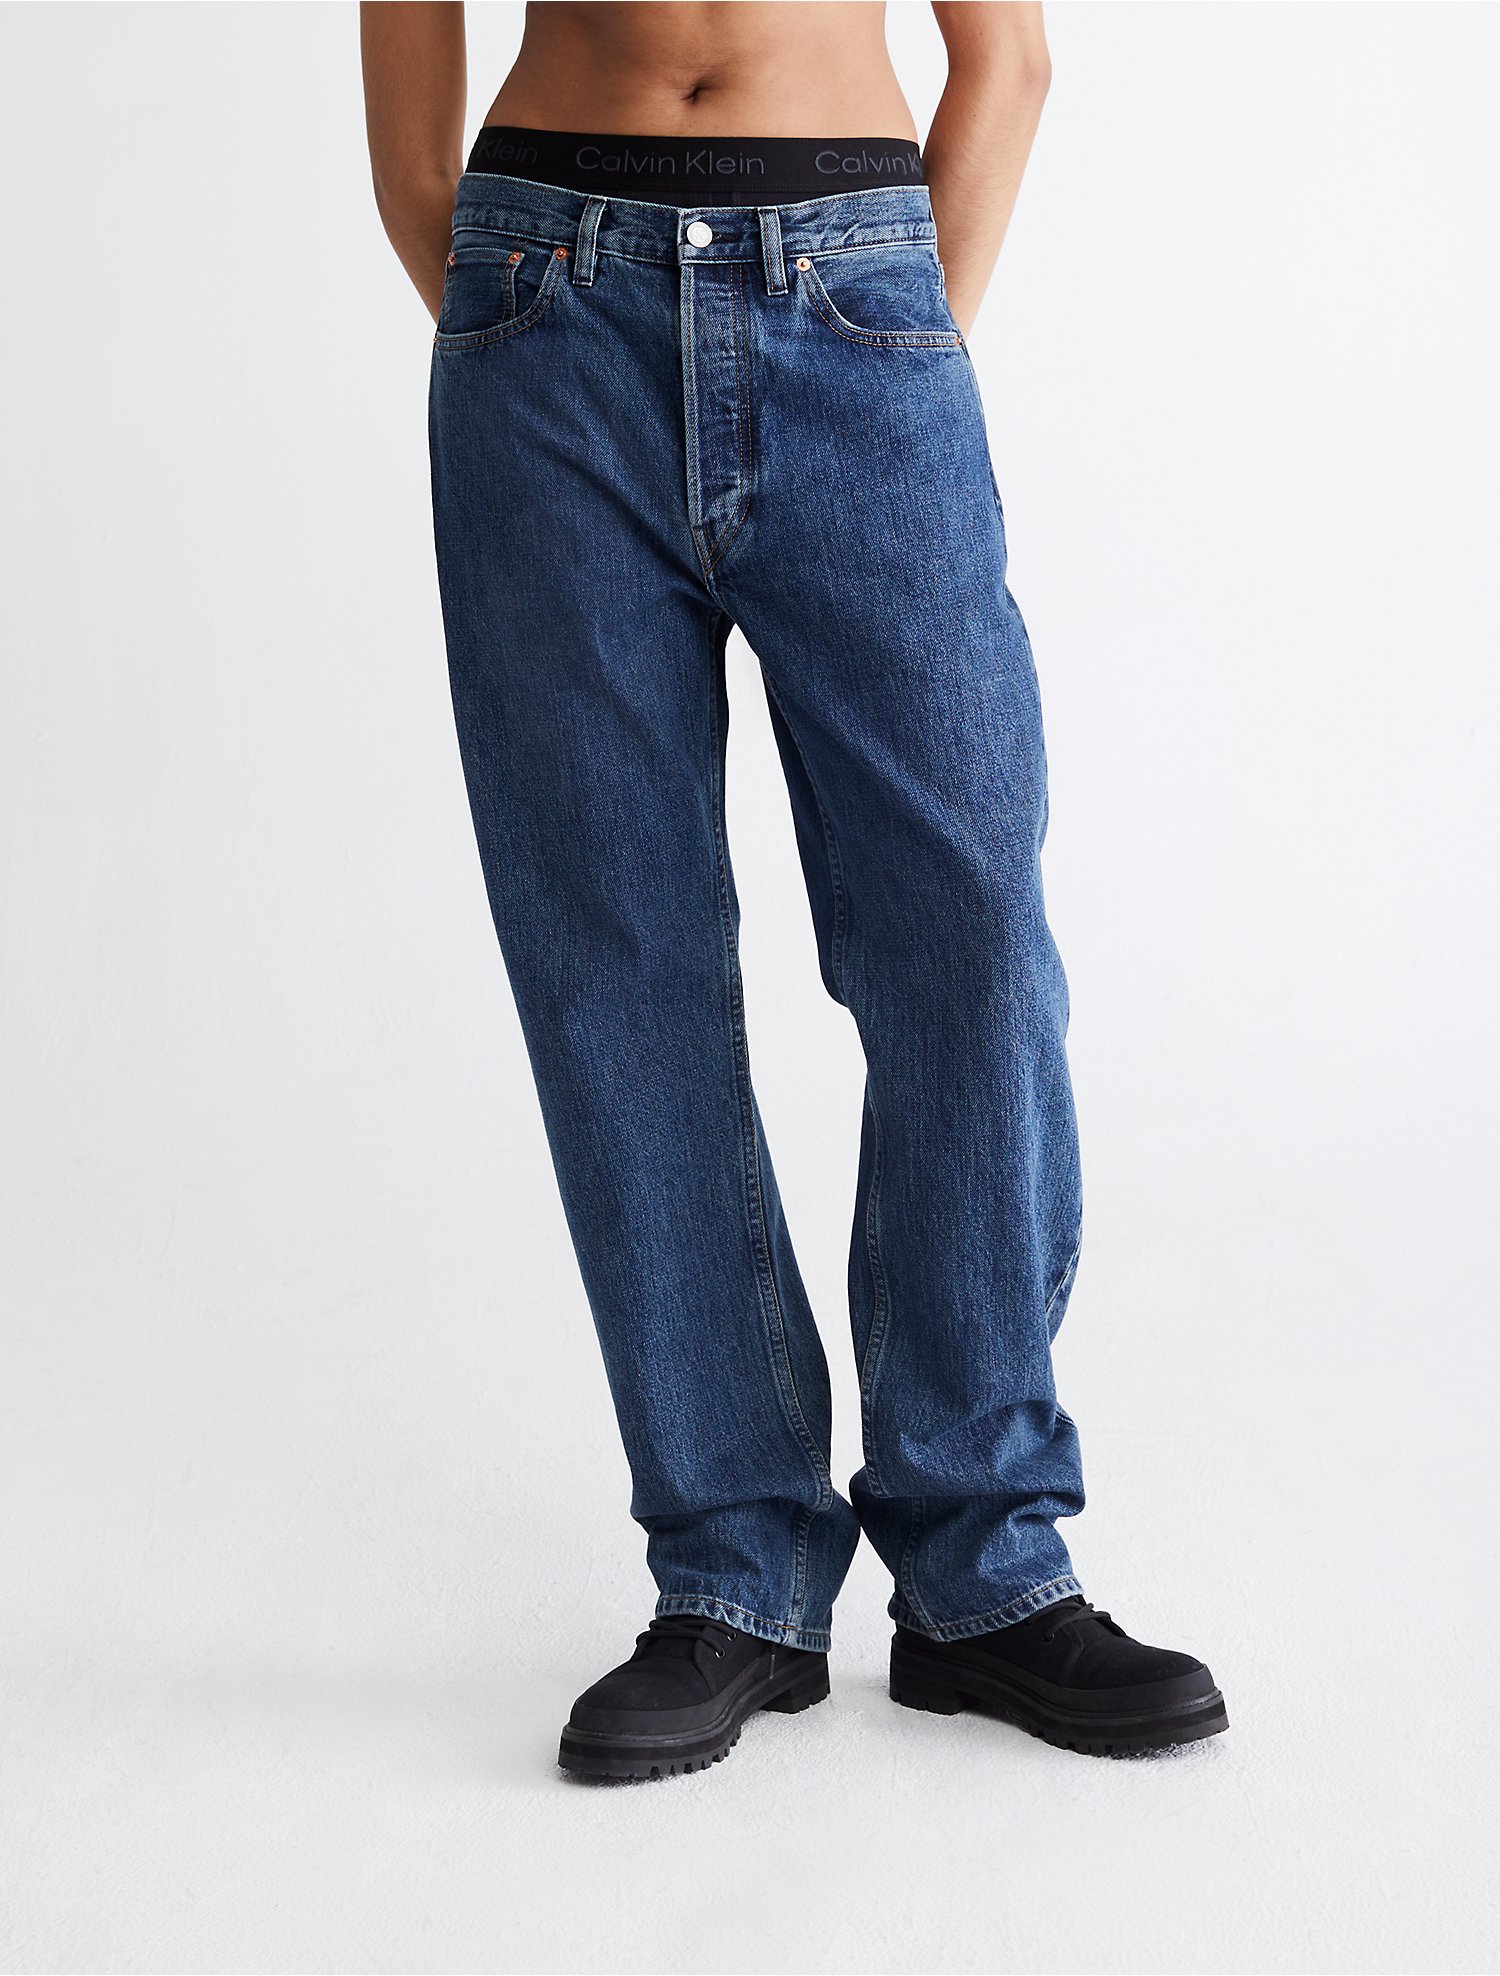 Standards Stone Indigo Rinse Leg Jeans | Calvin USA